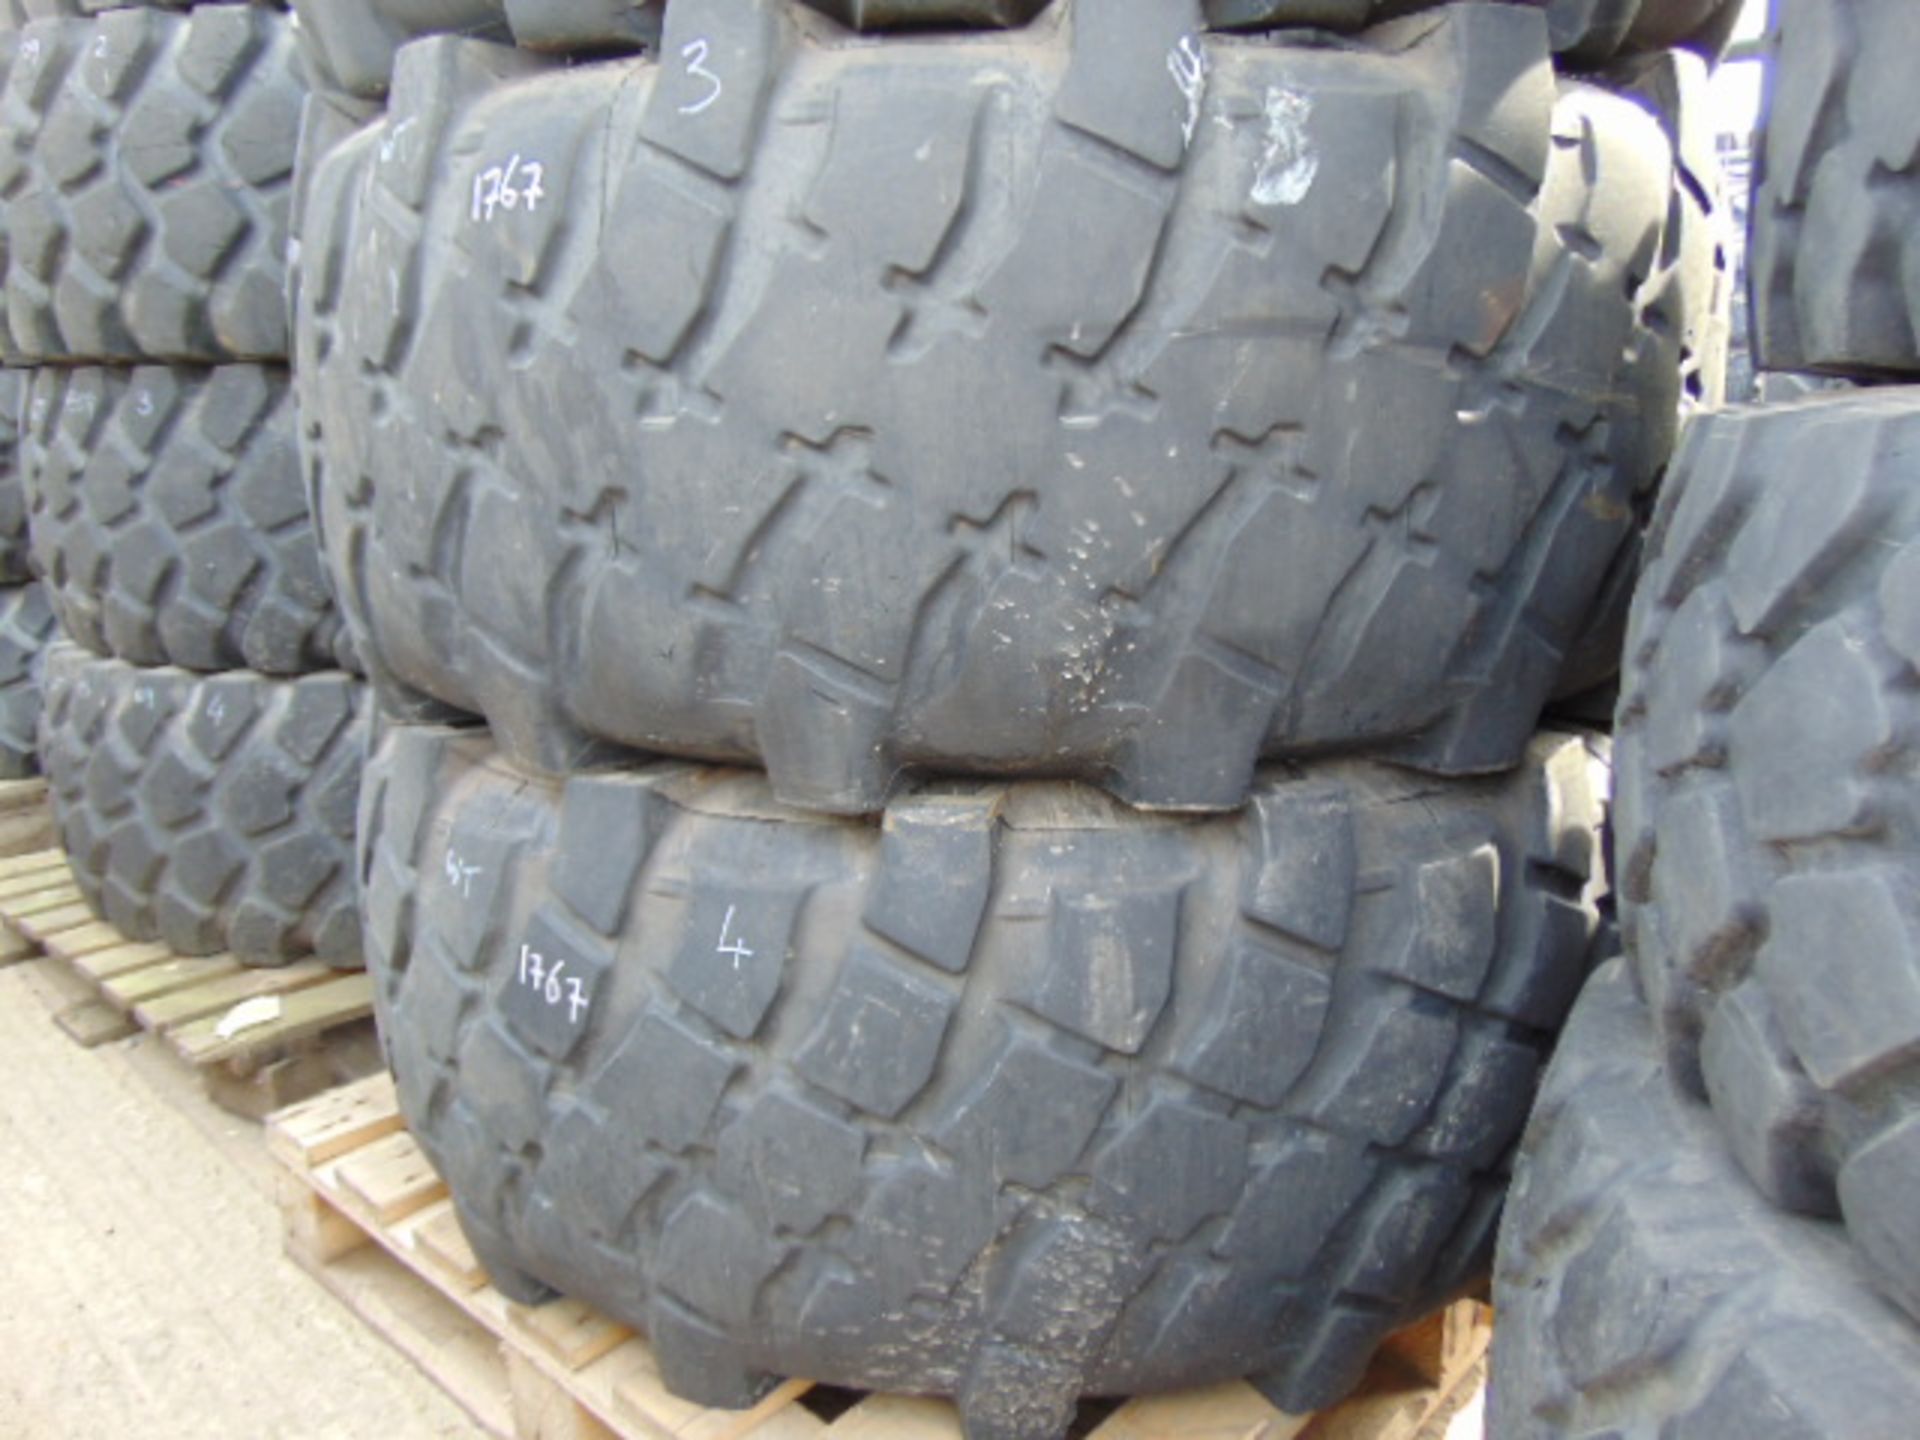 4 x Michelin XML 475/80 R20 Tyres - Image 3 of 5